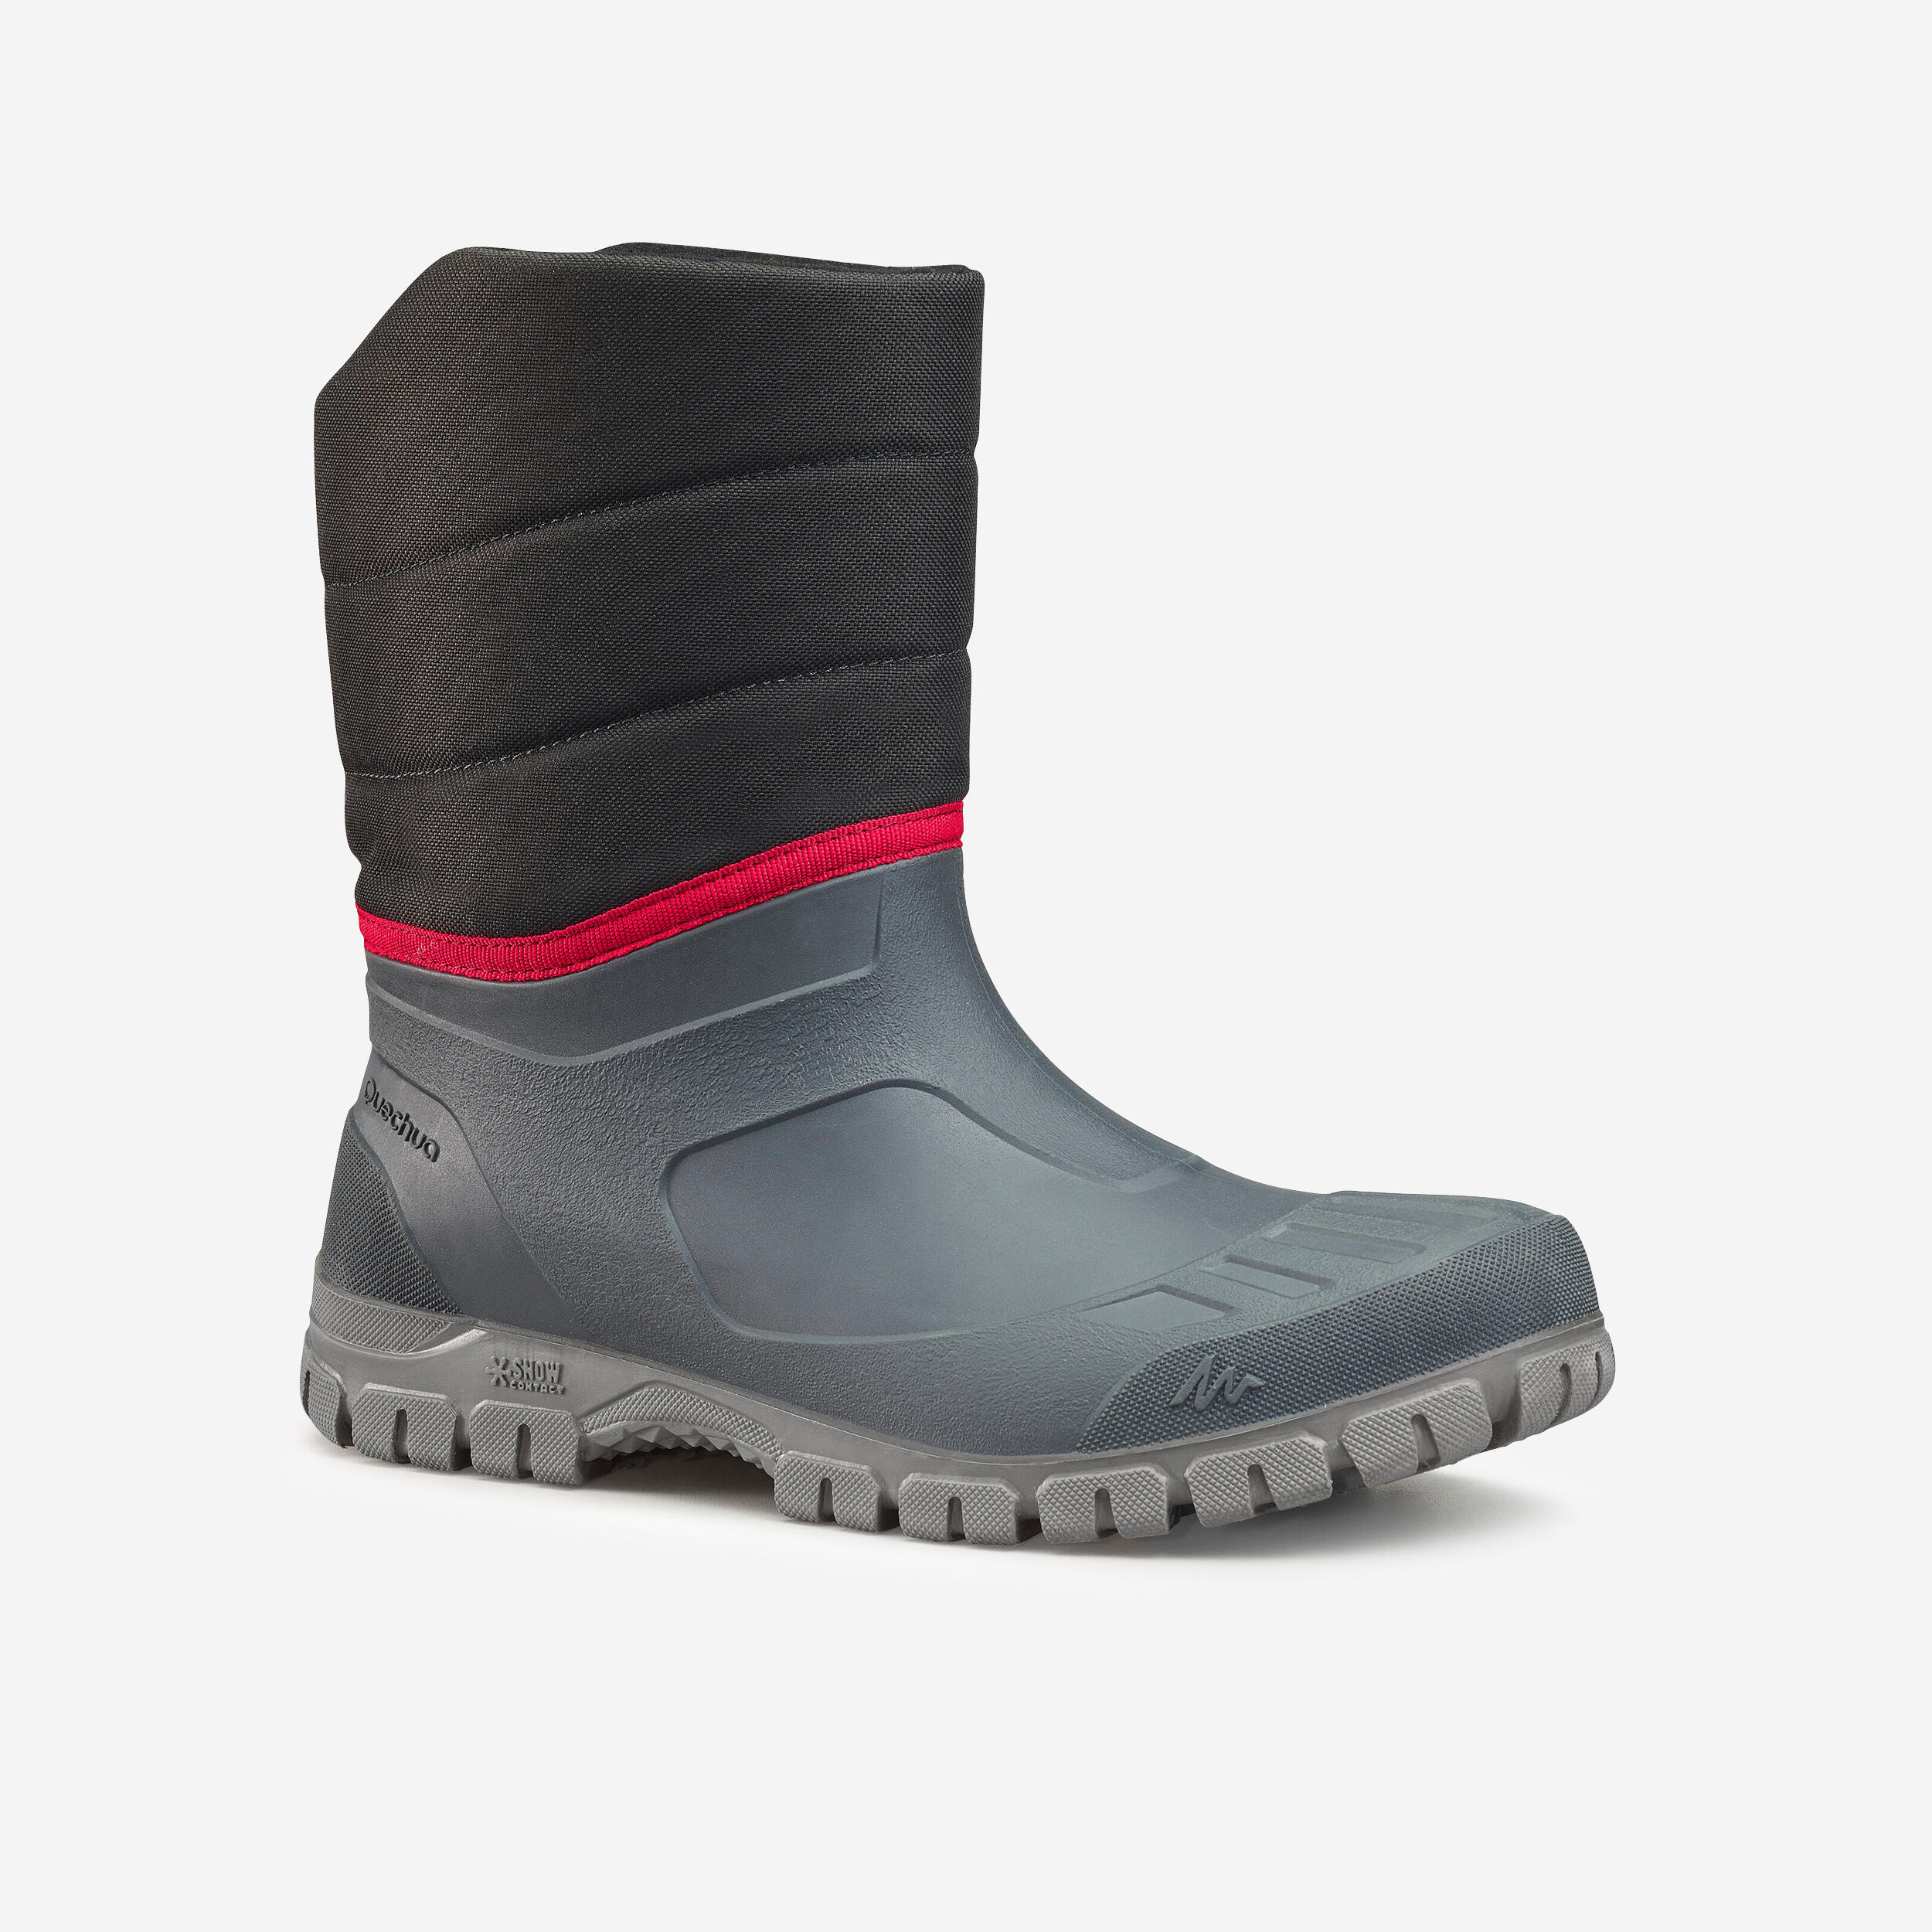 Image of Men’s Winter Boots - SH 100 Black